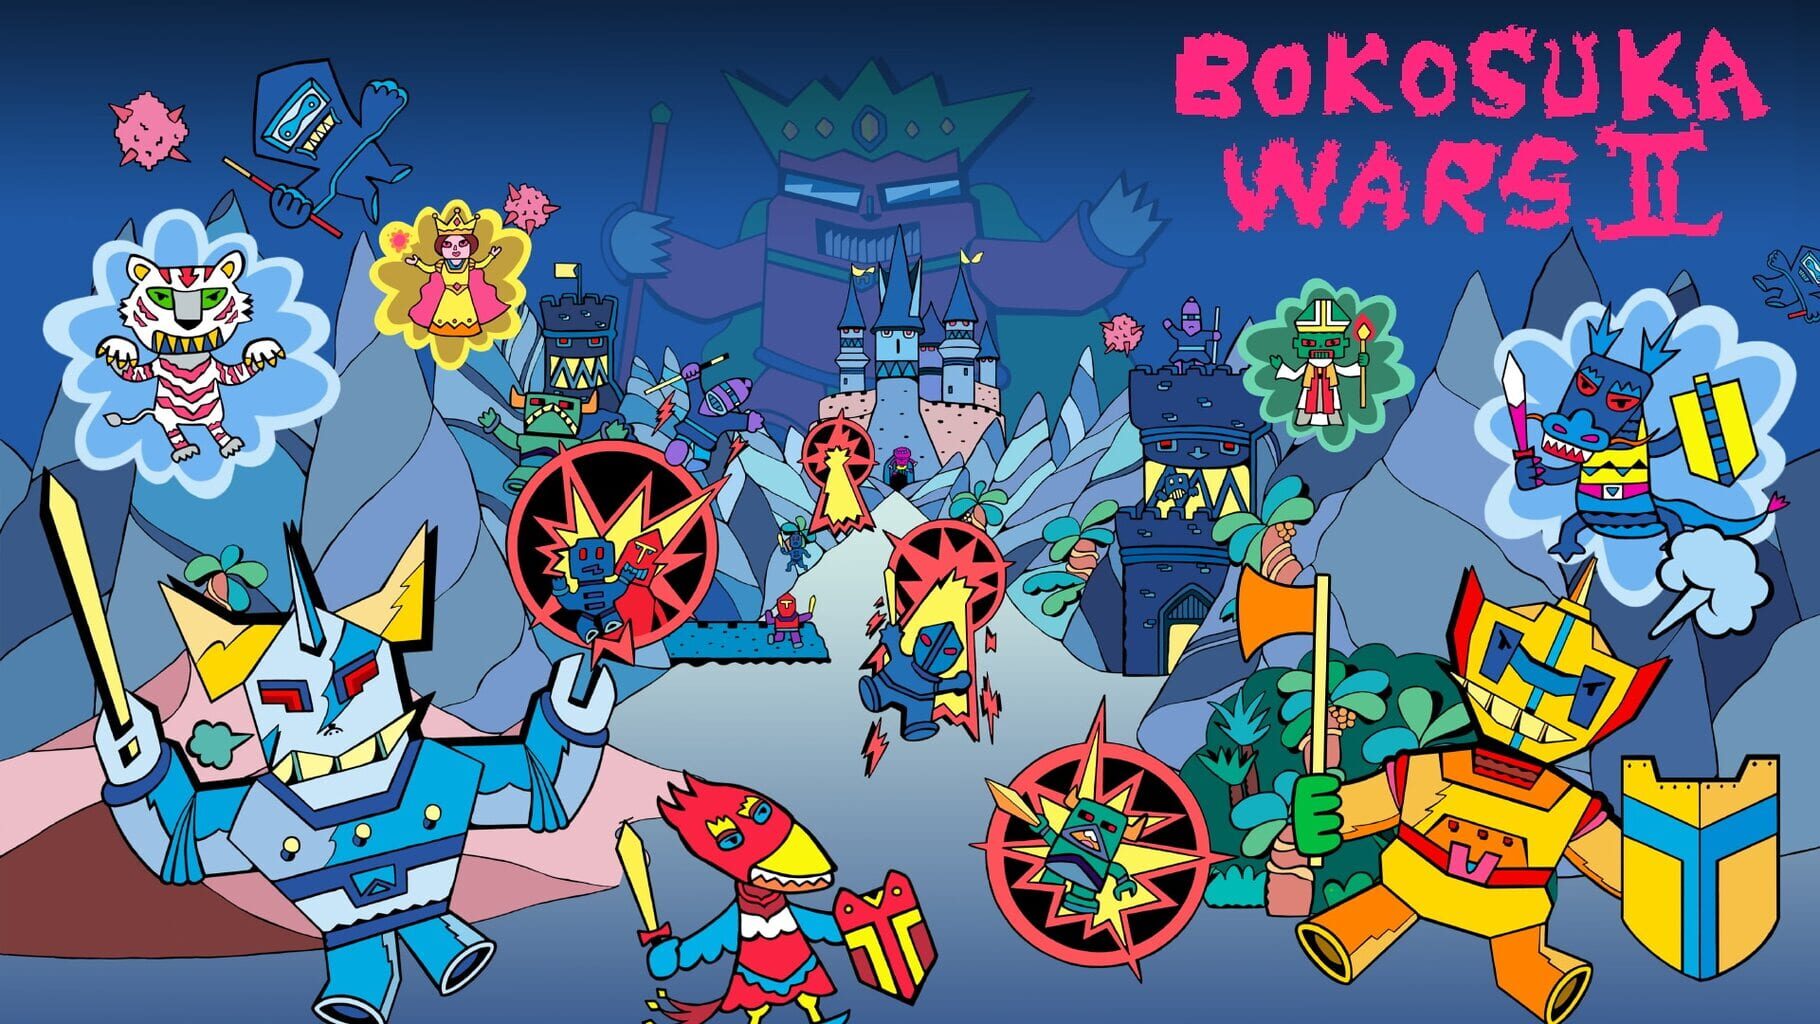 Bokosuka Wars II artwork